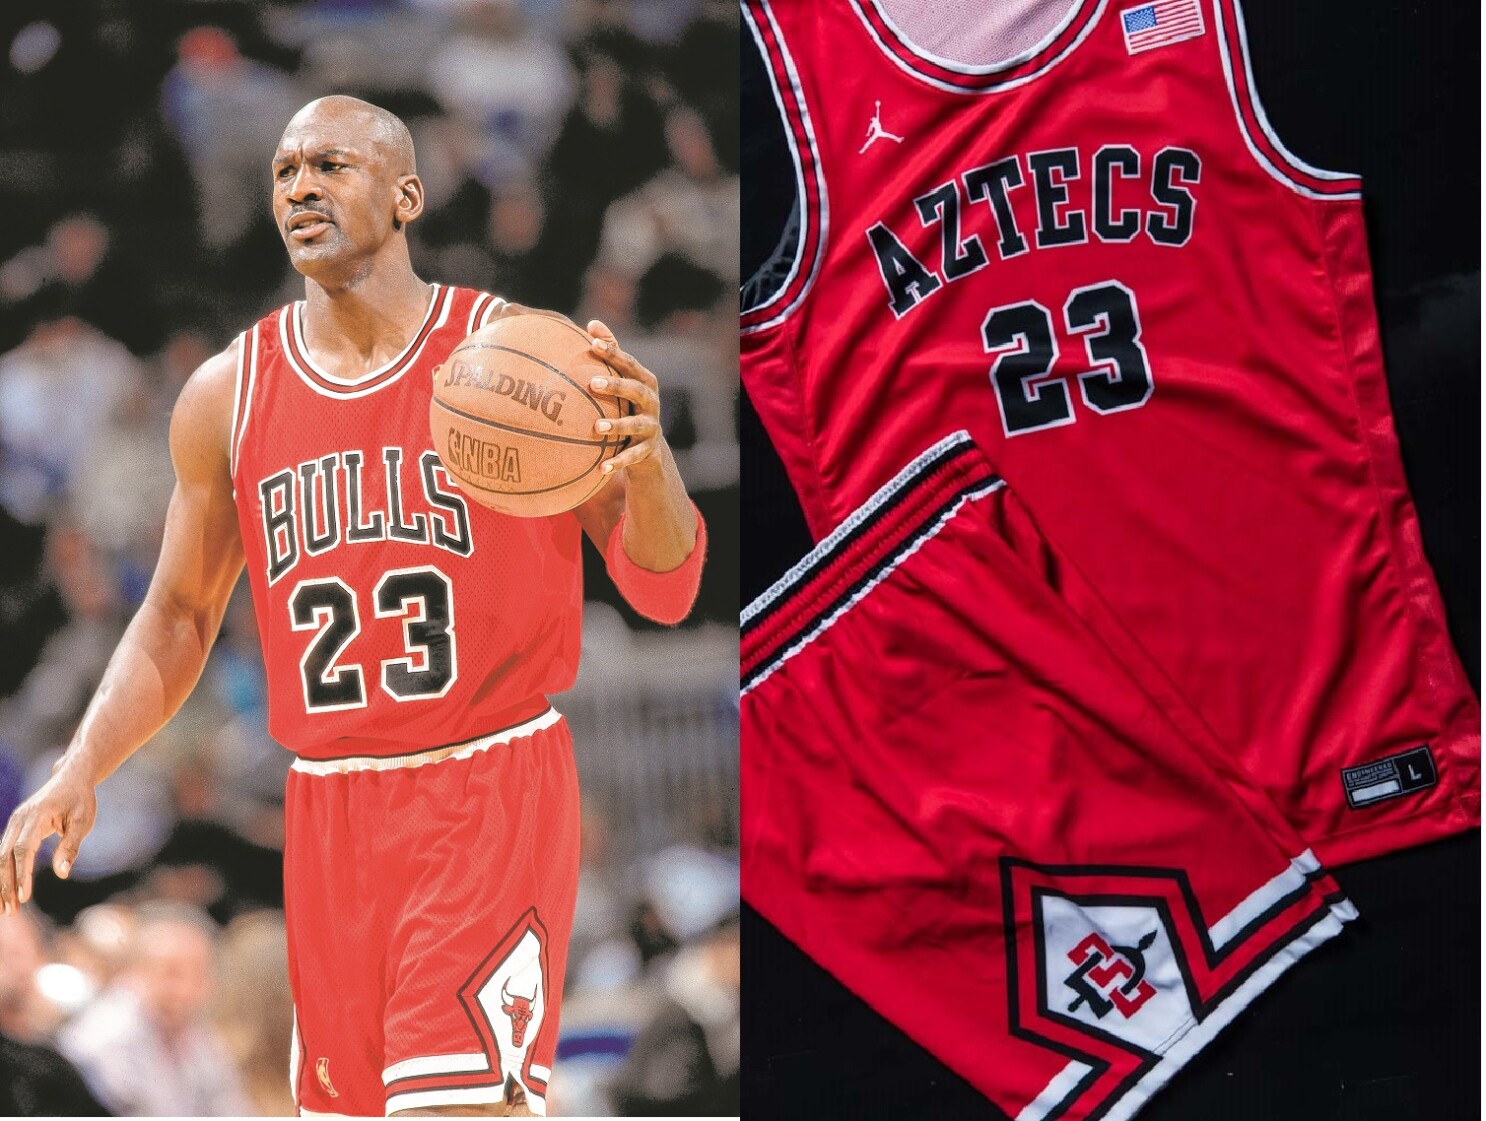 San Diego State Basketball To Wear Chicago Bulls Retro Uniforms The San Diego Union Tribune